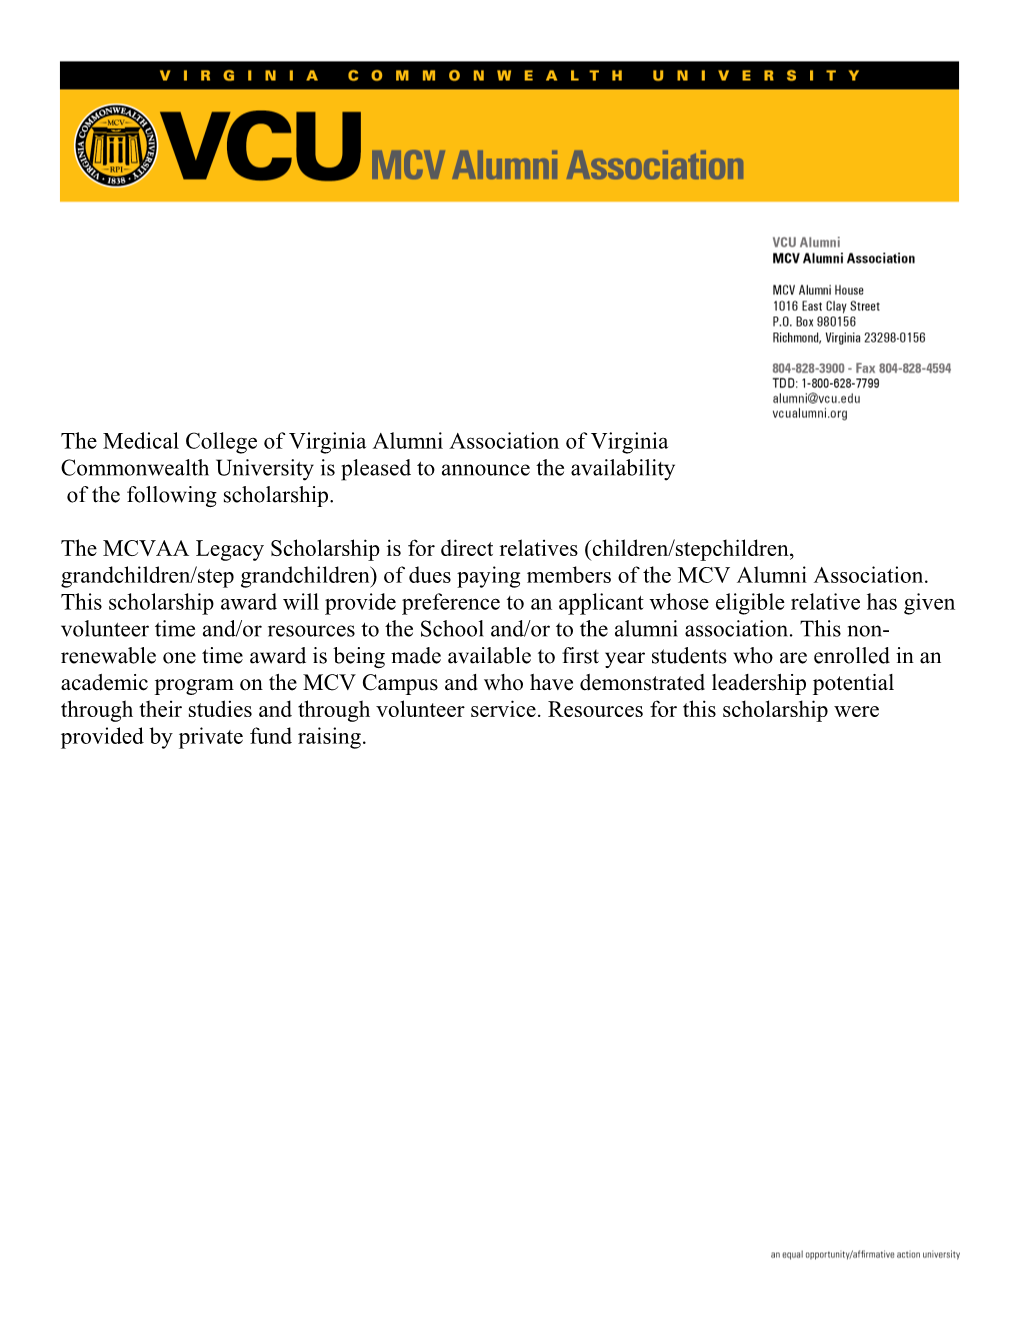 The Medical College of Virginia Alumni Association of Virginia